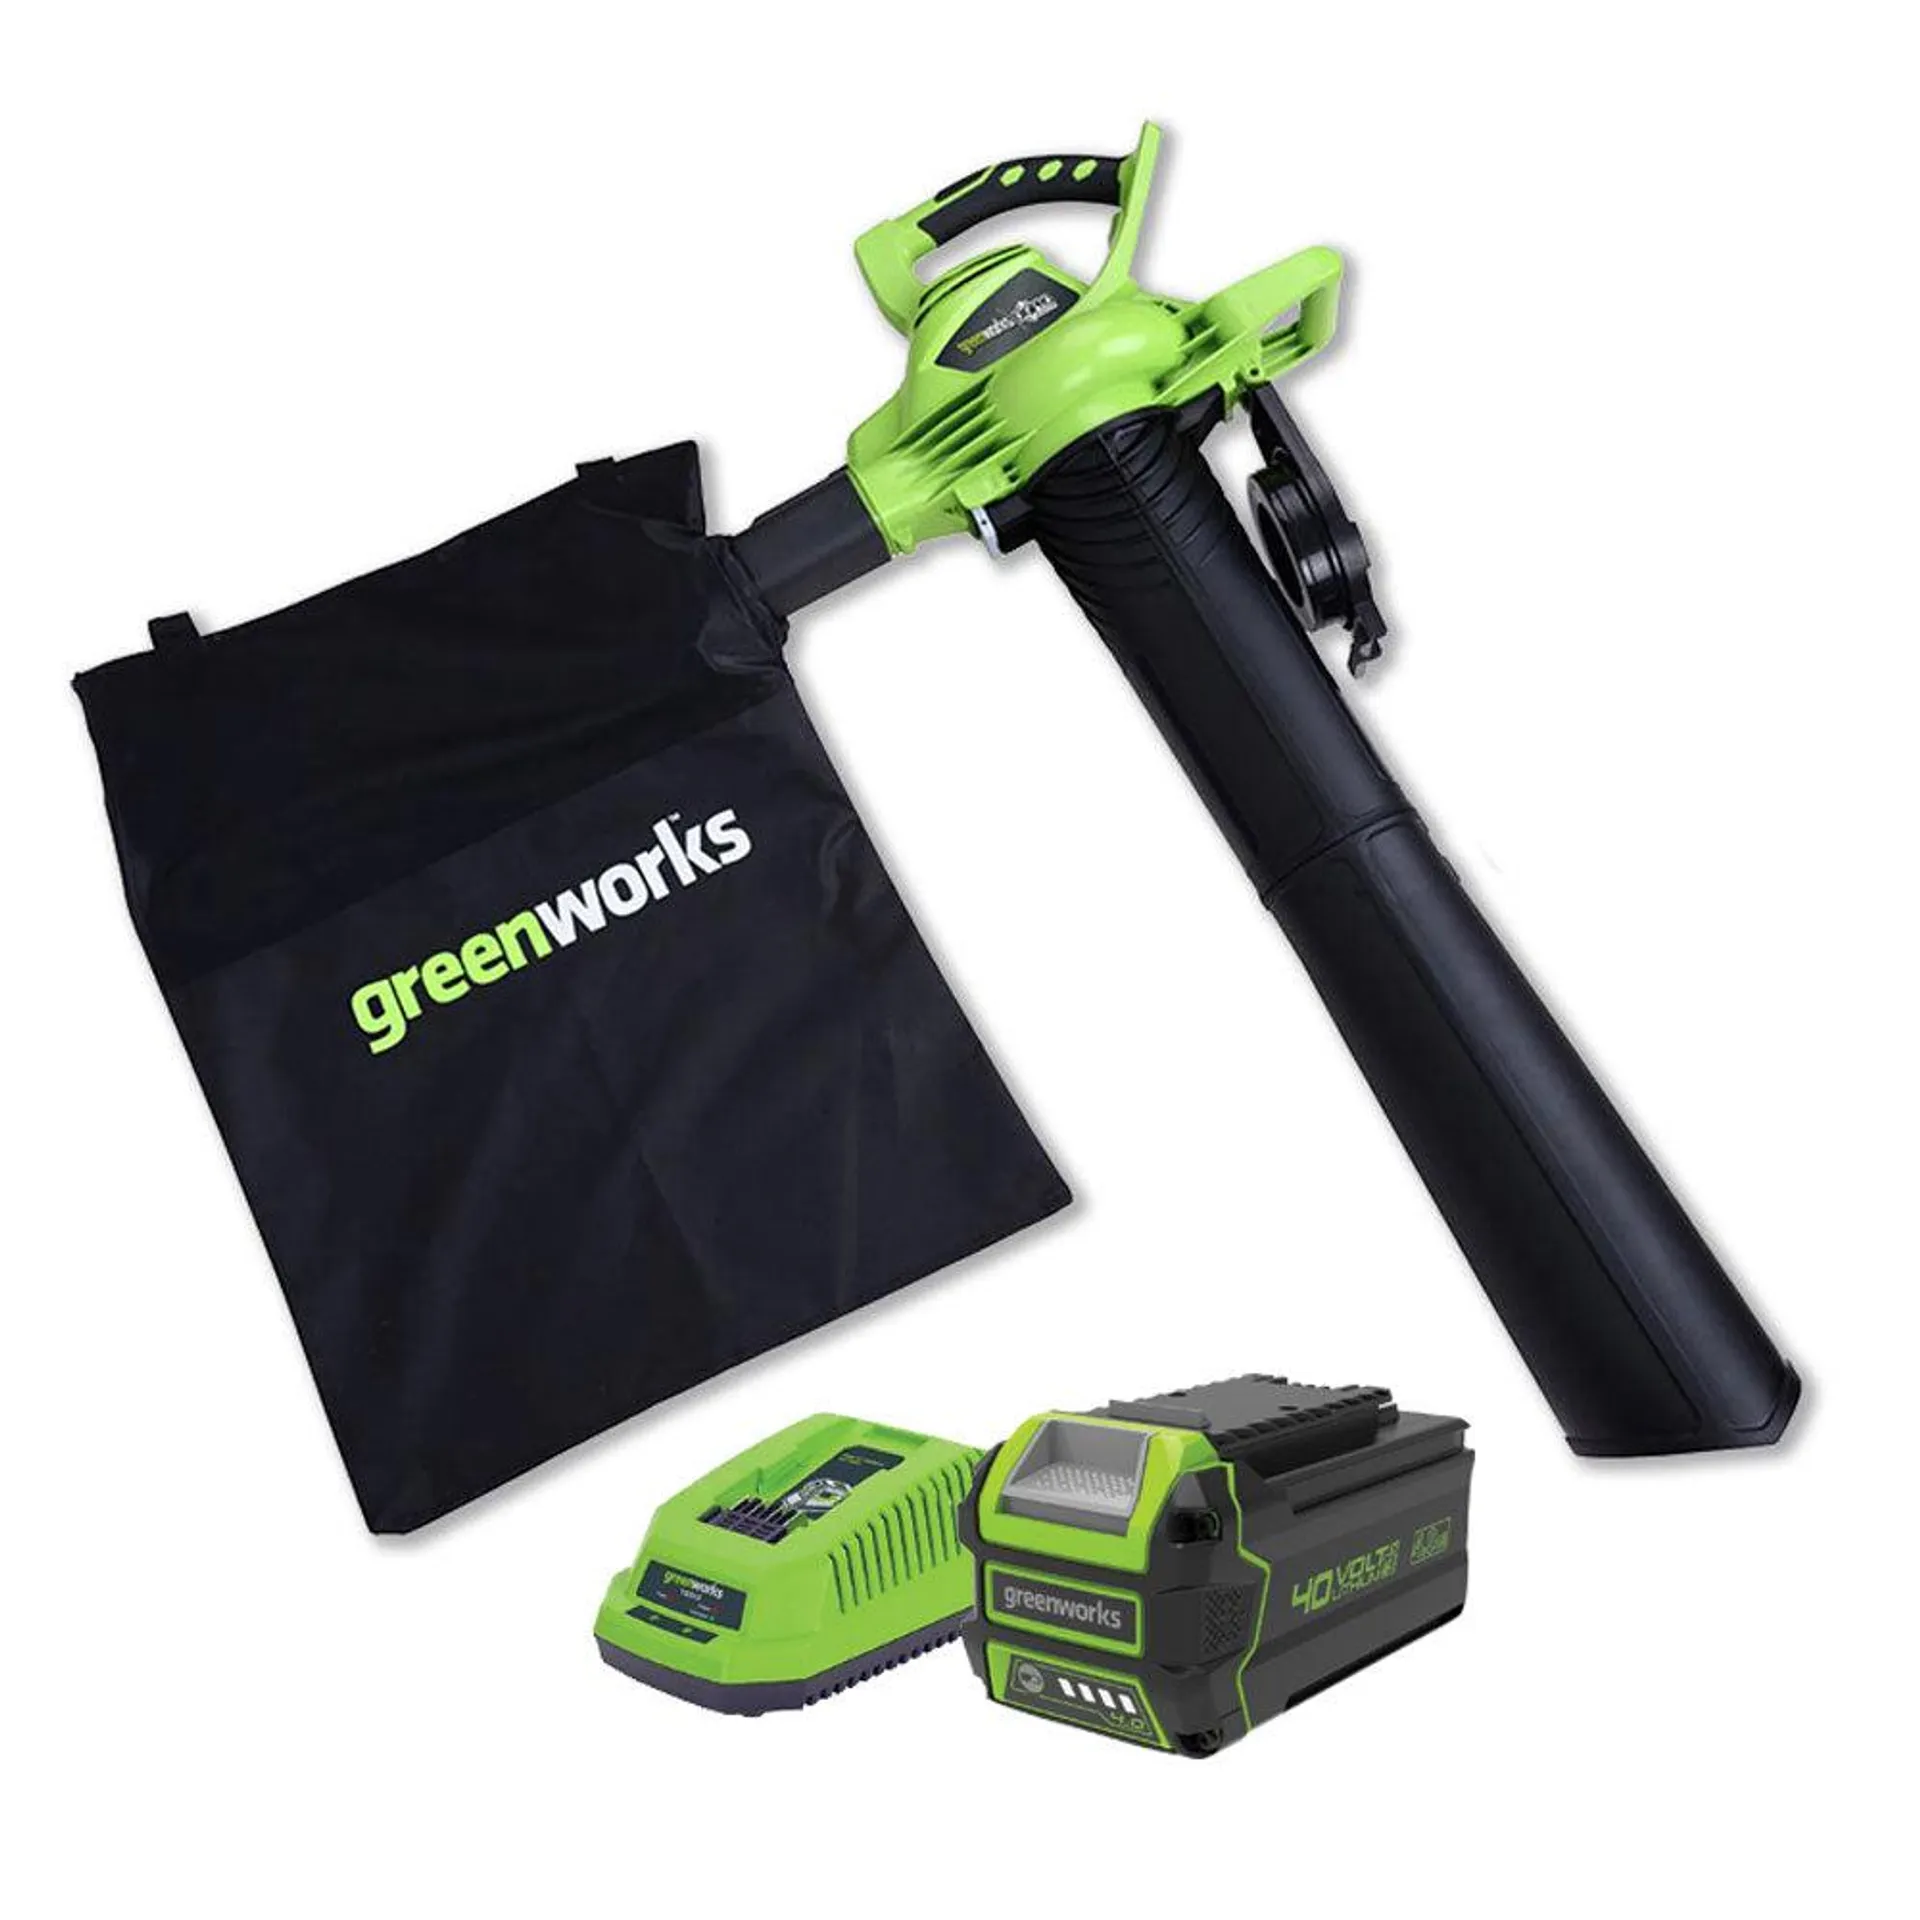 Greenworks Blower Vac G-Max 40V with 4.0Ah Li-Ion Battery